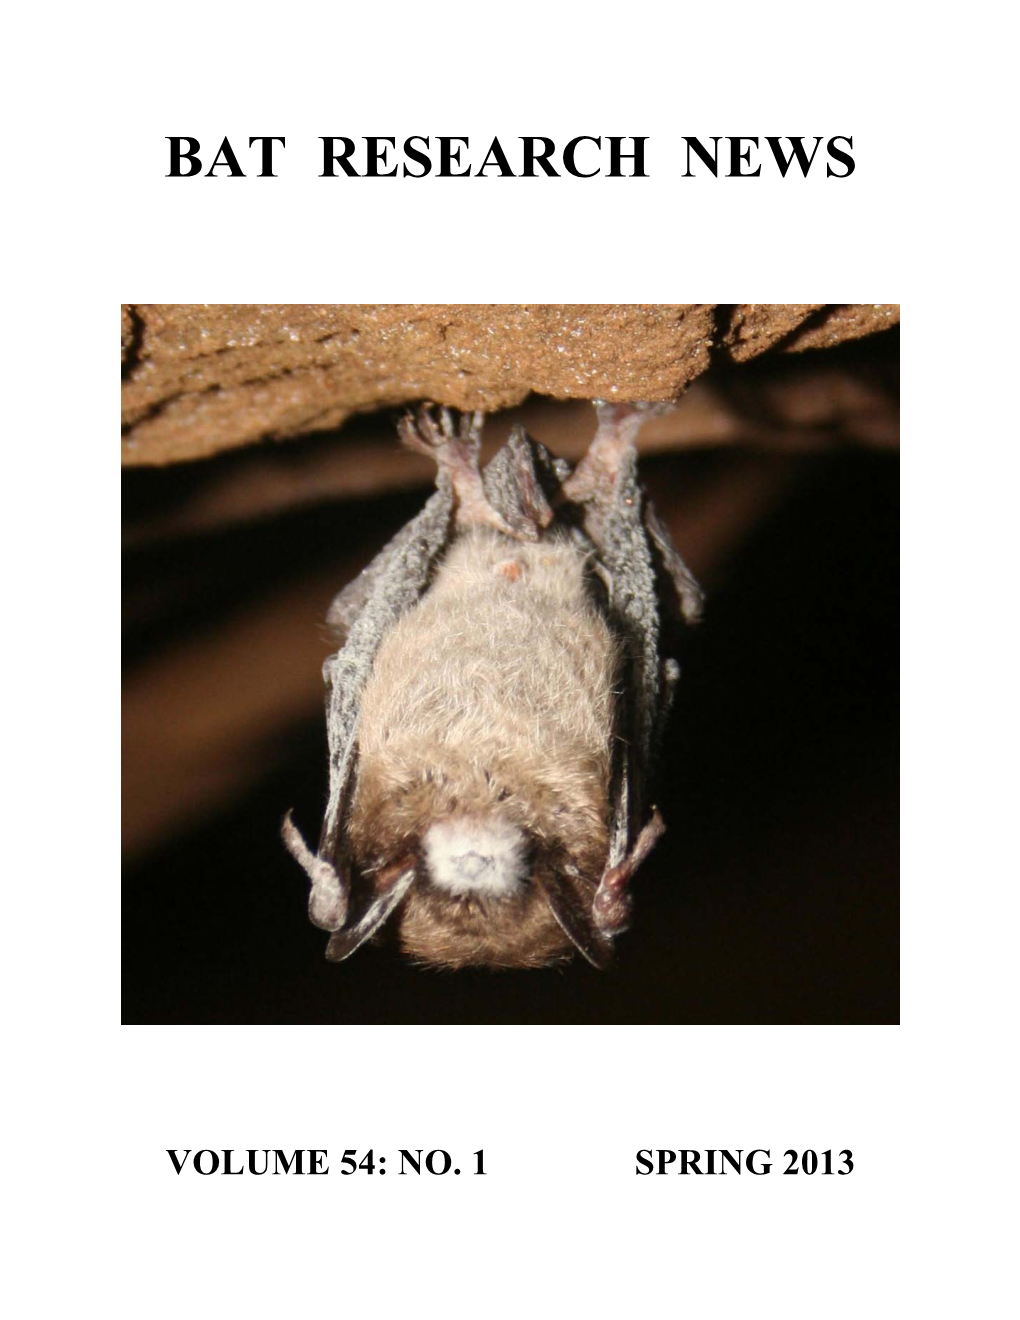 Volume 54: No. 1 Spring 2013 Bat Research News